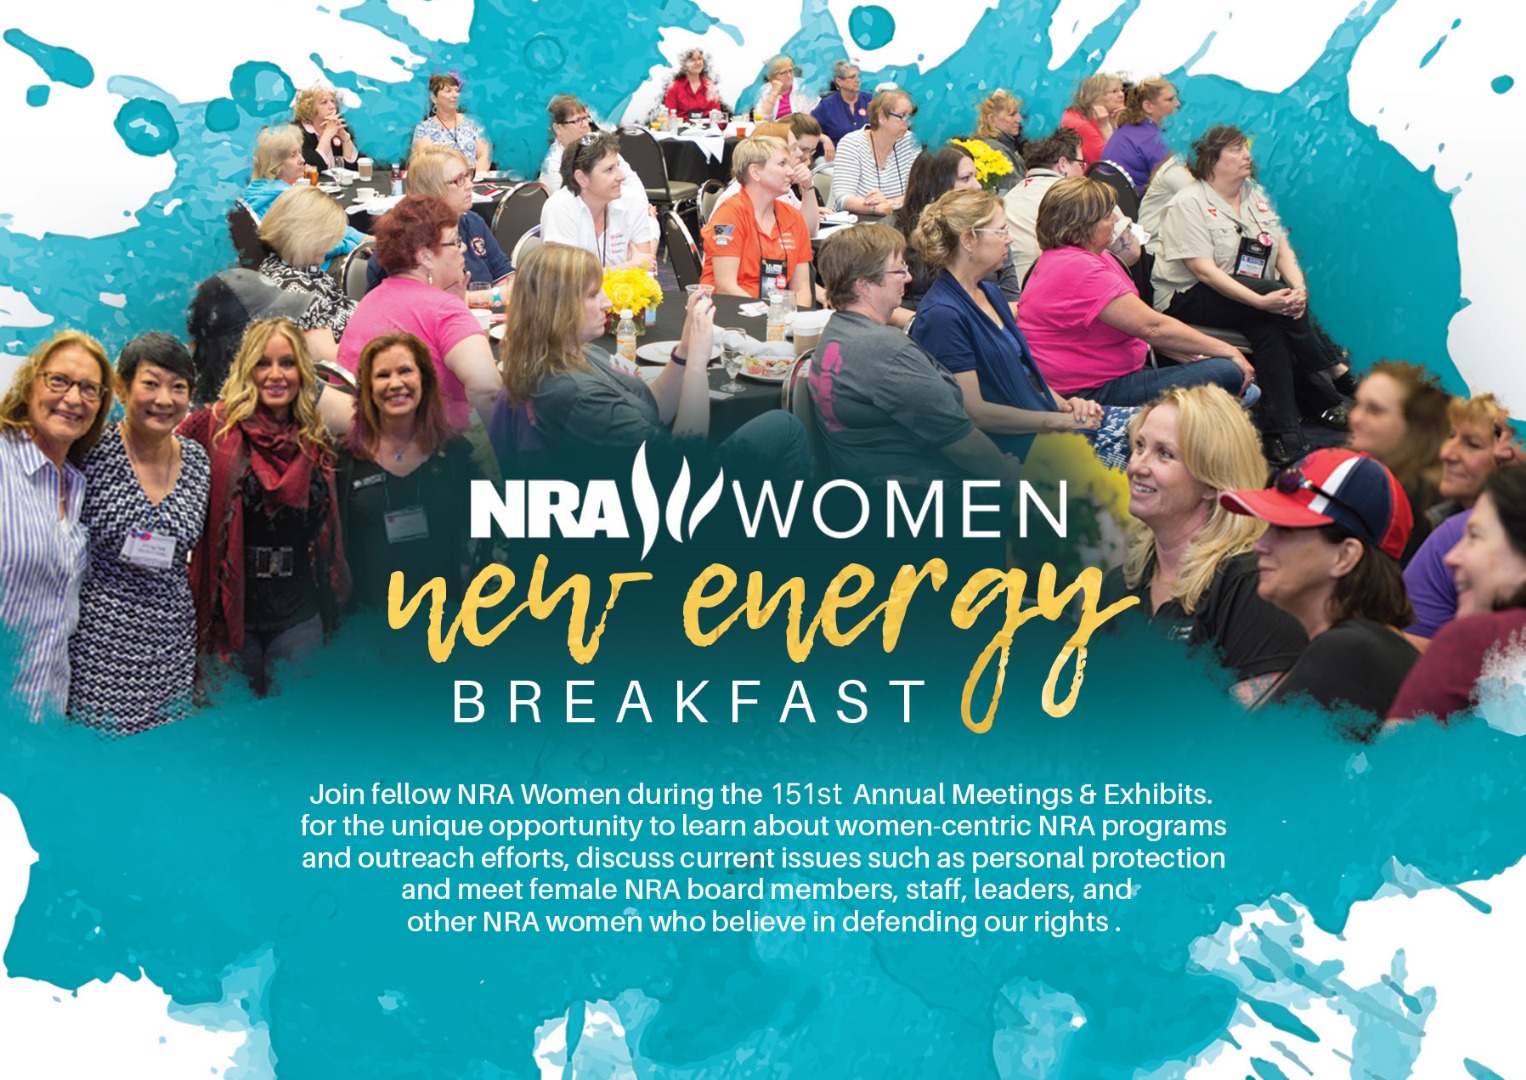 NRA Women's New Energy Breakfast